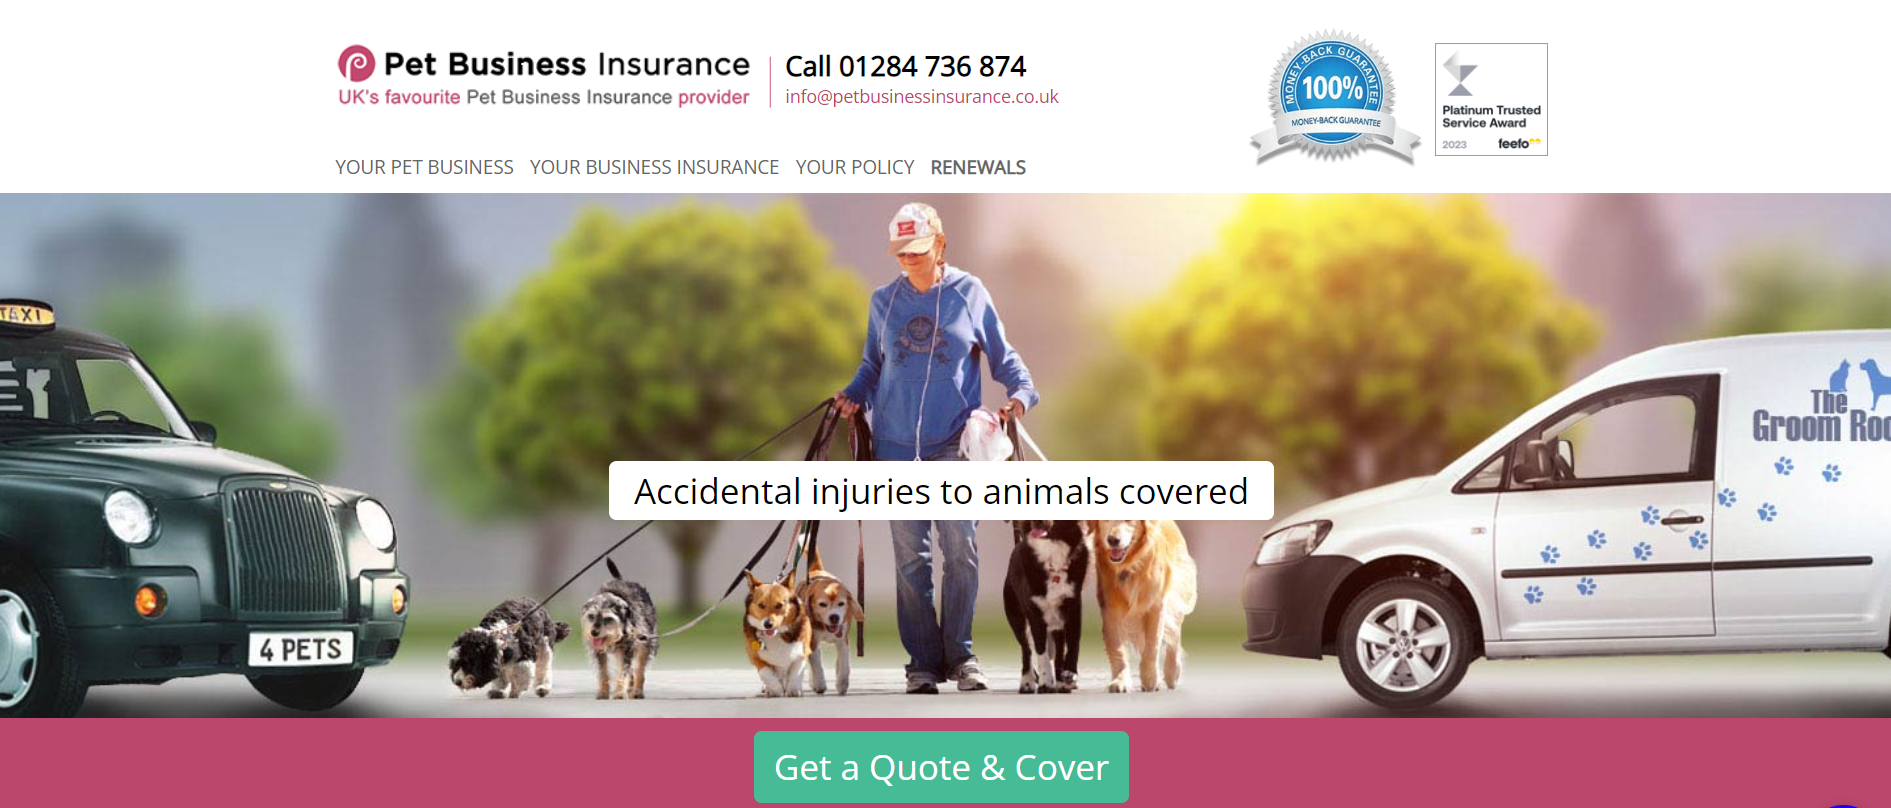 Pet Business Insurance